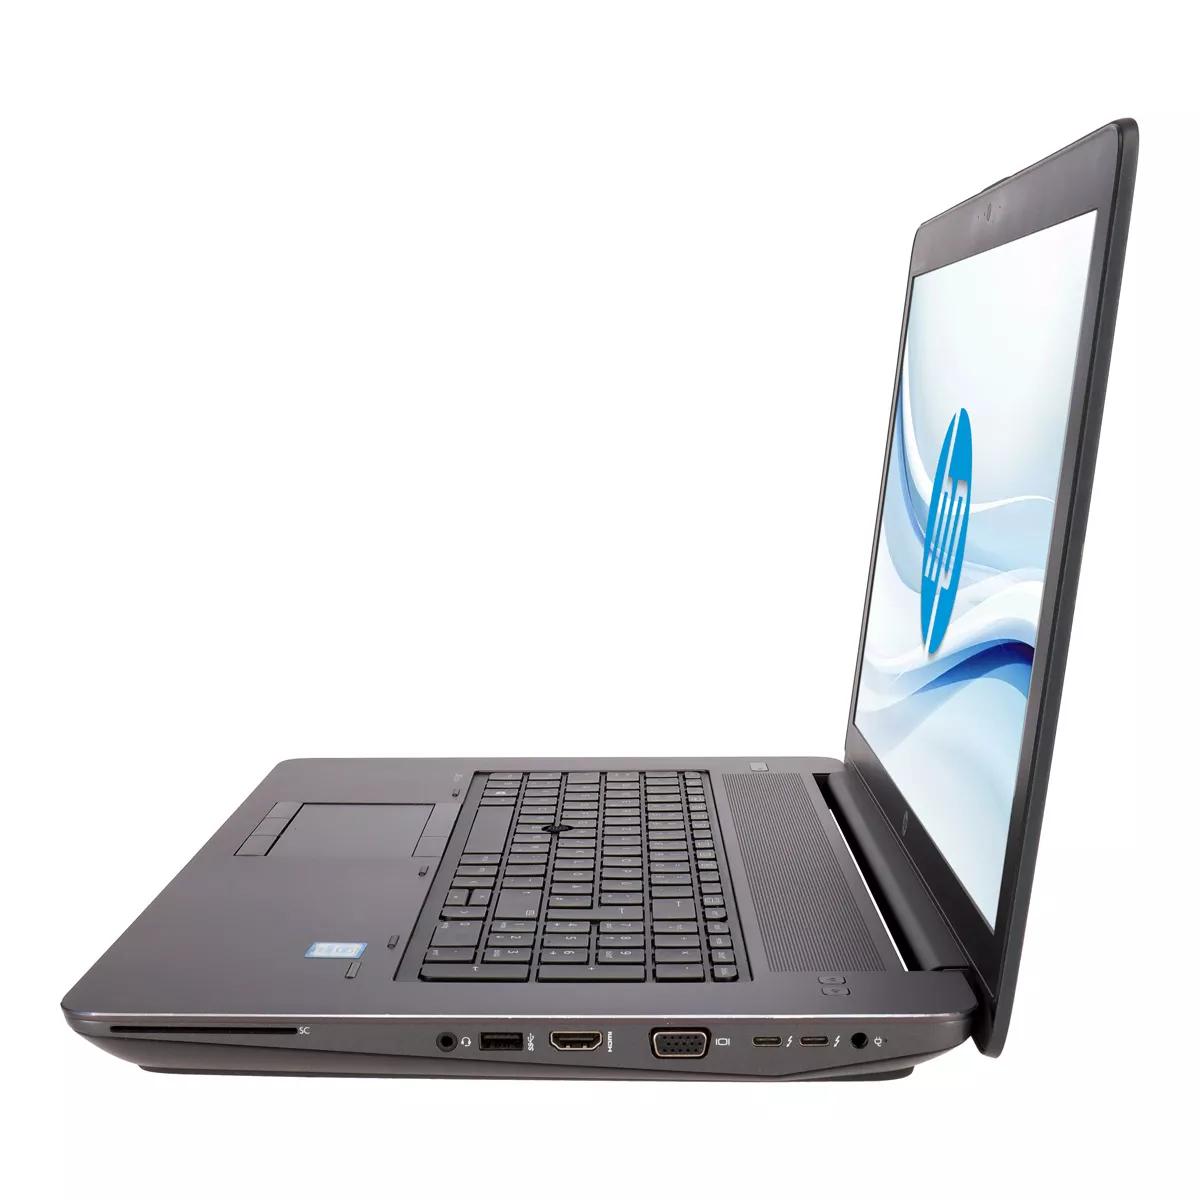 HP ZBook 17 G4 Core i7 7820HQ Full-HD nVidia Quadro P3000M 32 GB DDR4 500 GB M.2 SSD Webcam B